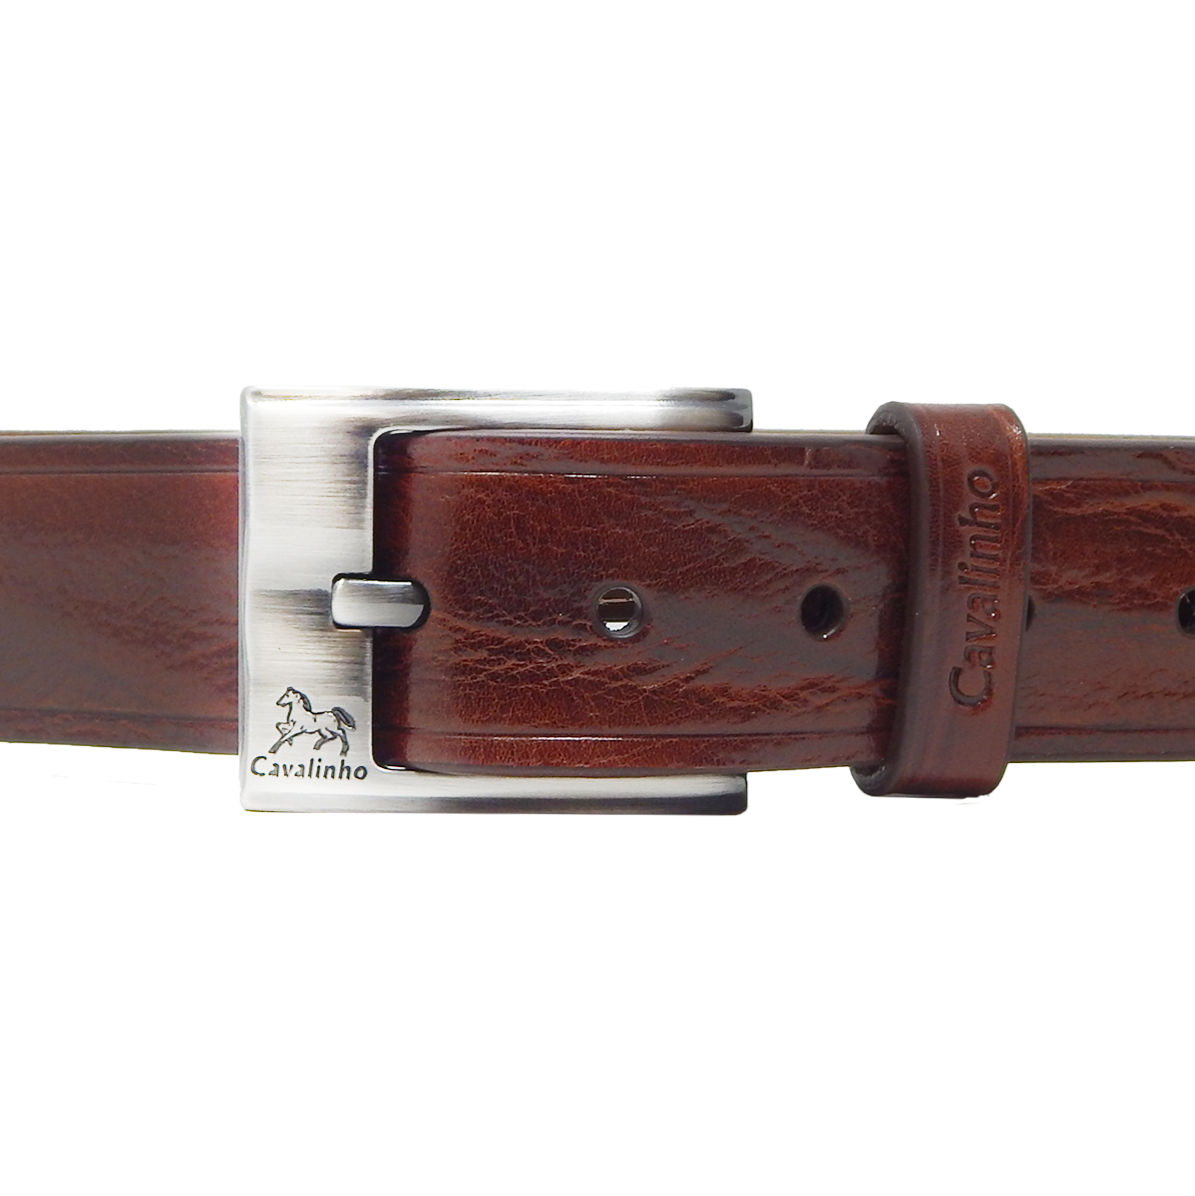 Cavalinho Formal Leather Belt - Brown Silver - 58020456.02_2a2661dd-d804-47b4-b345-de5ea47b7027